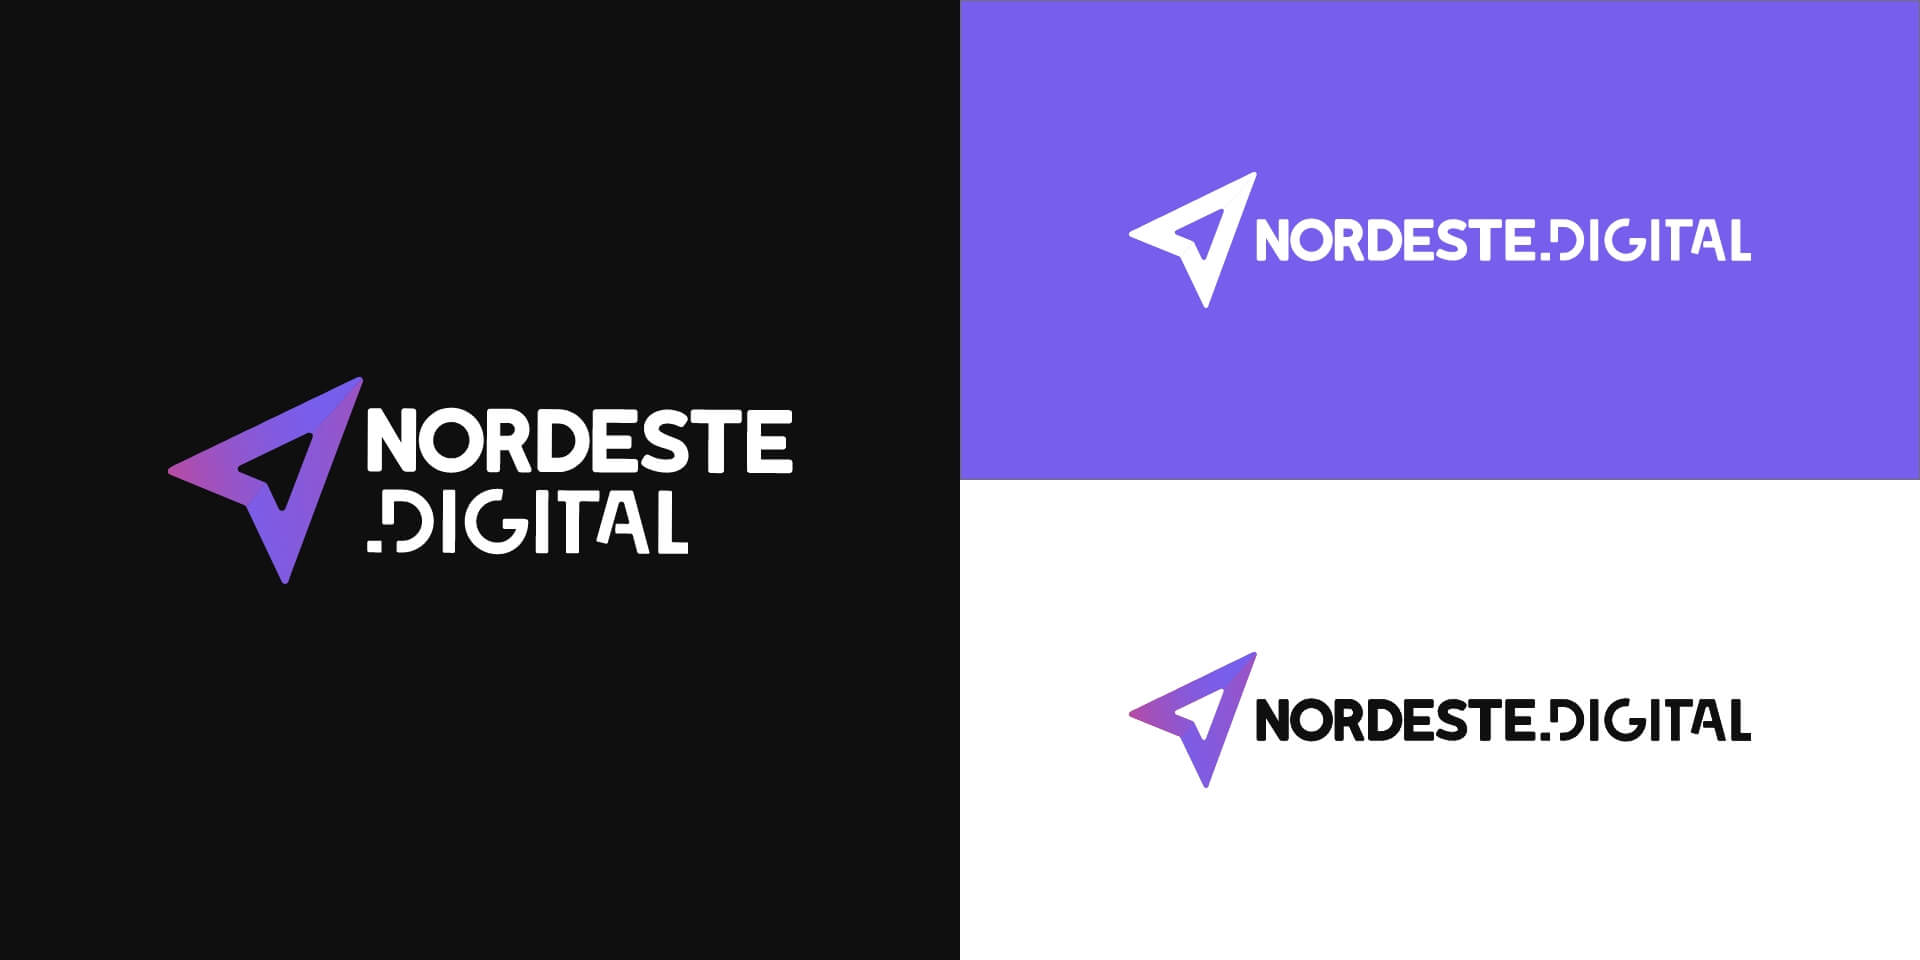 modo7-banner-port-nordeste-digital-versao-da-logo